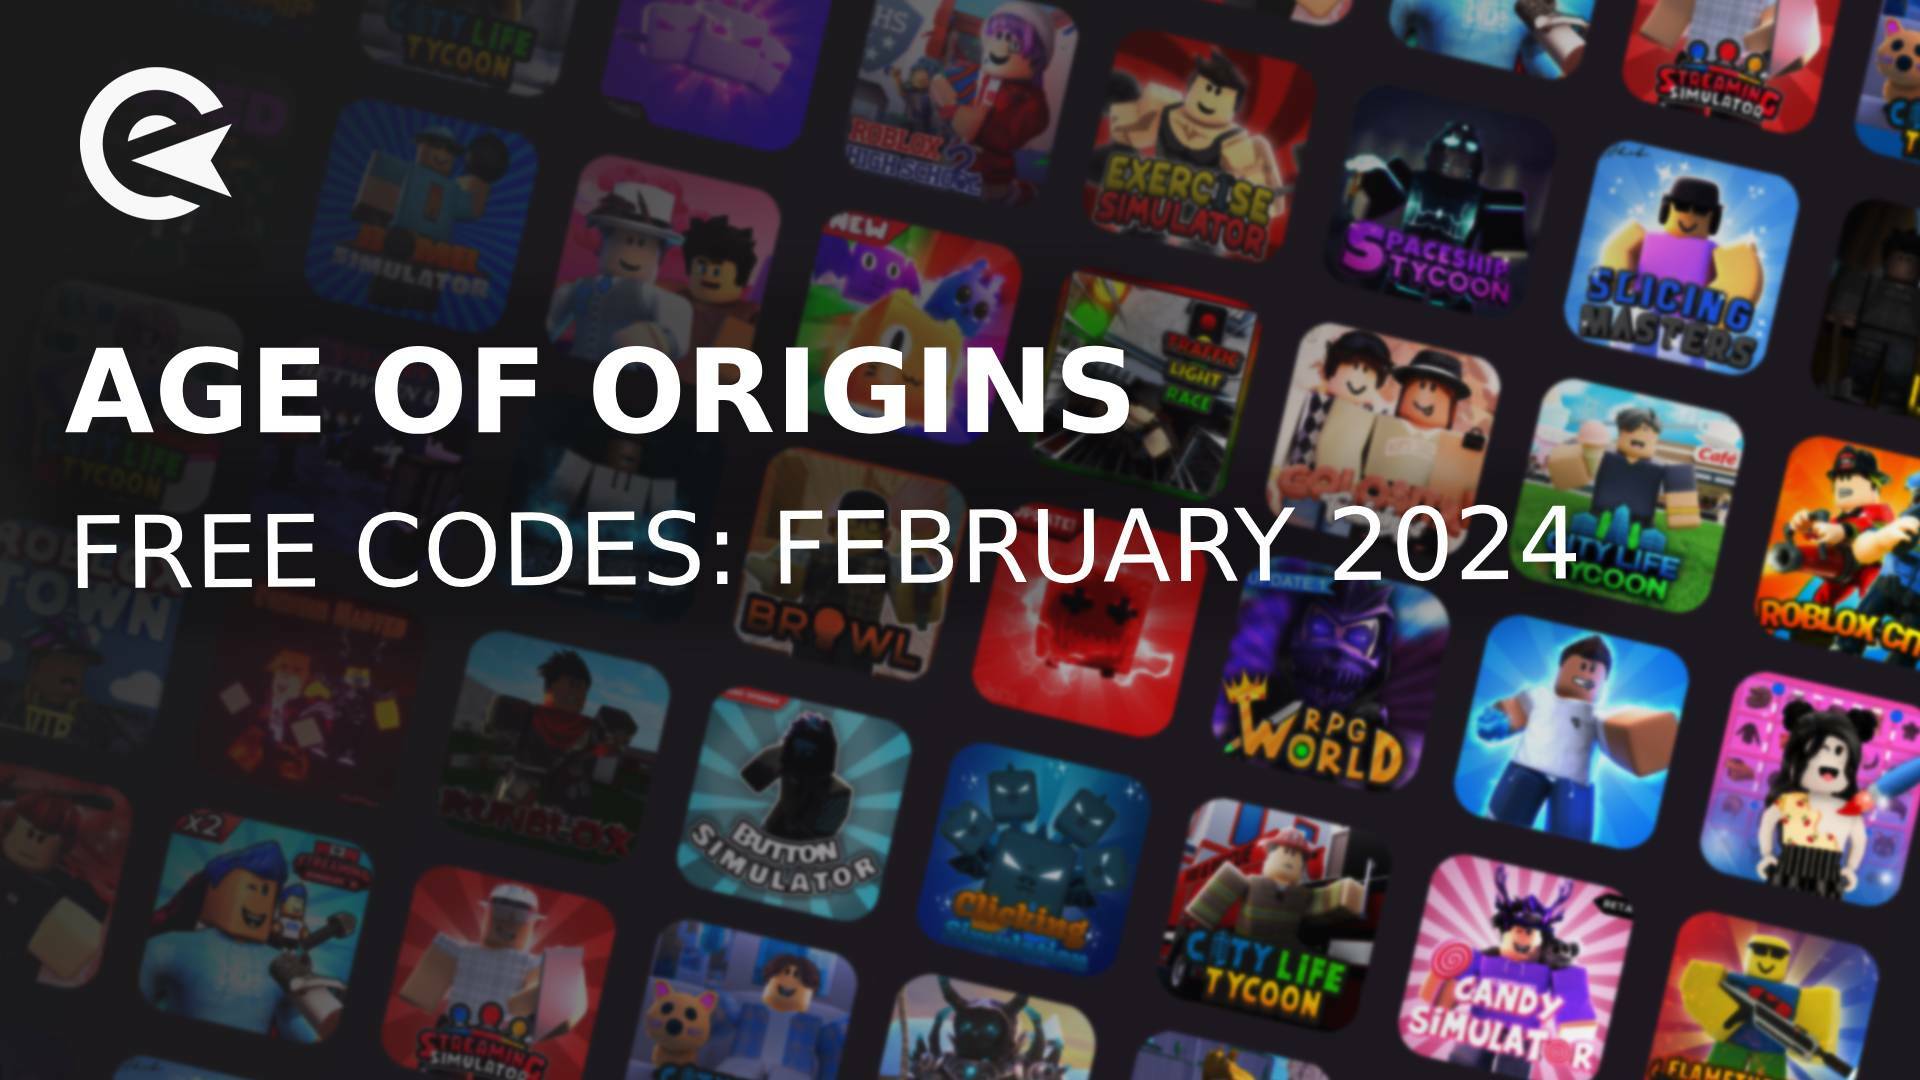 Age of origins codes february